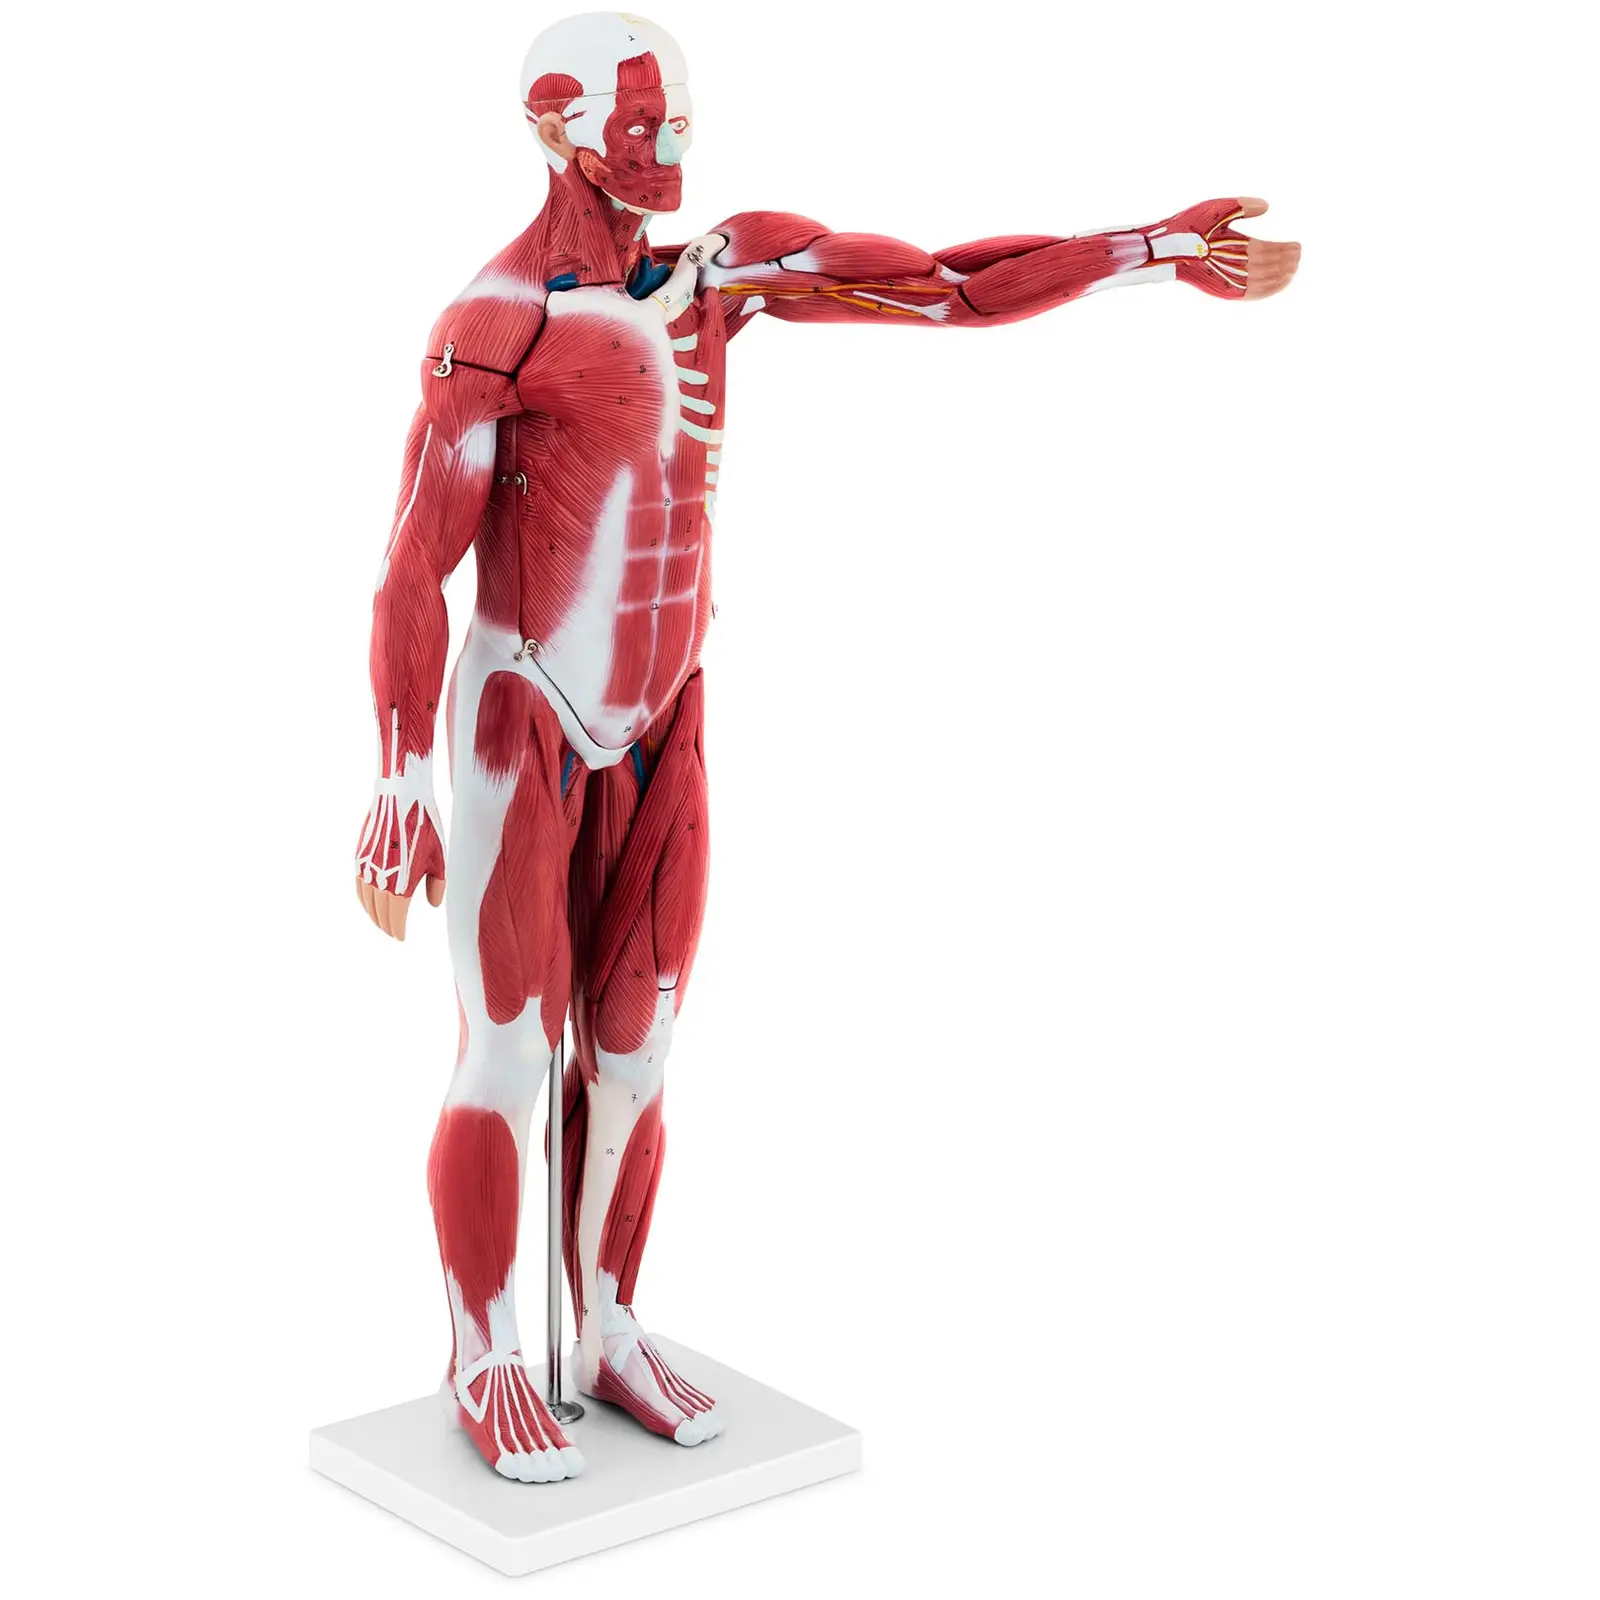 Corpo humano - 76 cm - modelo anatómico